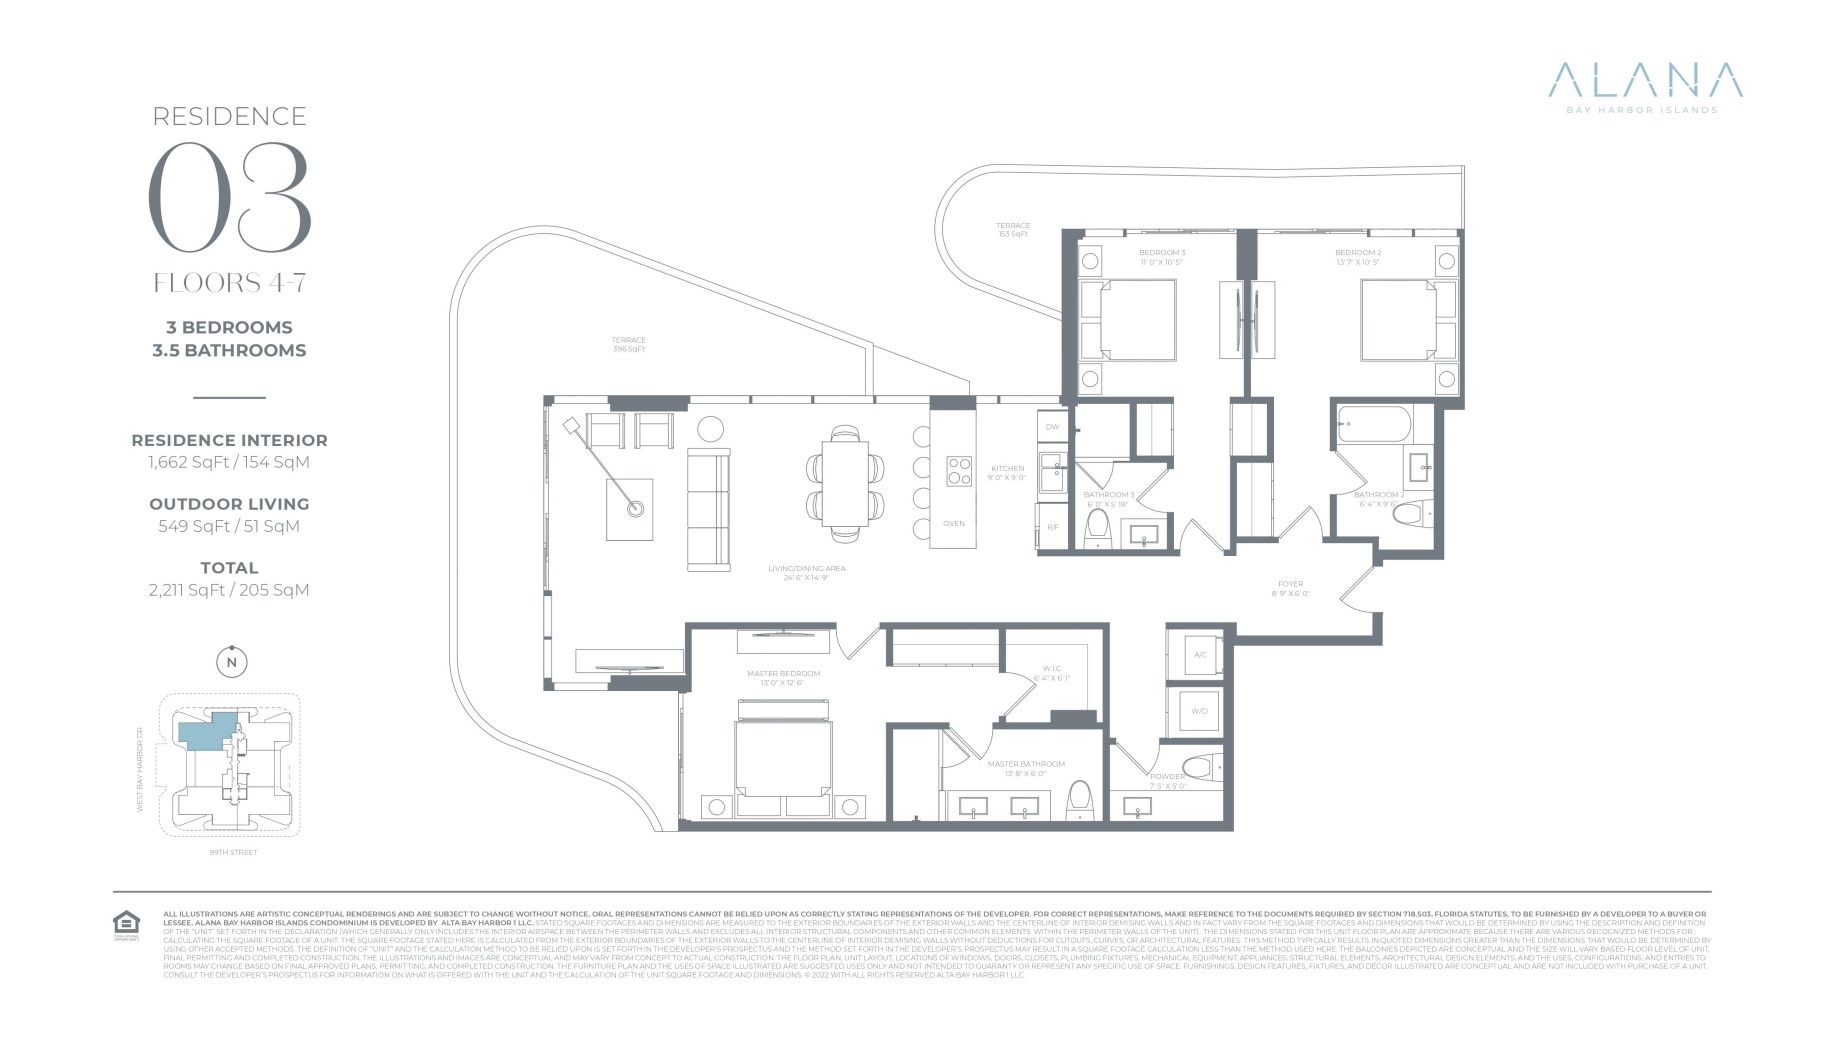 Alana_Floorplan_Residence03_floor4-7_3bed_3,5bath